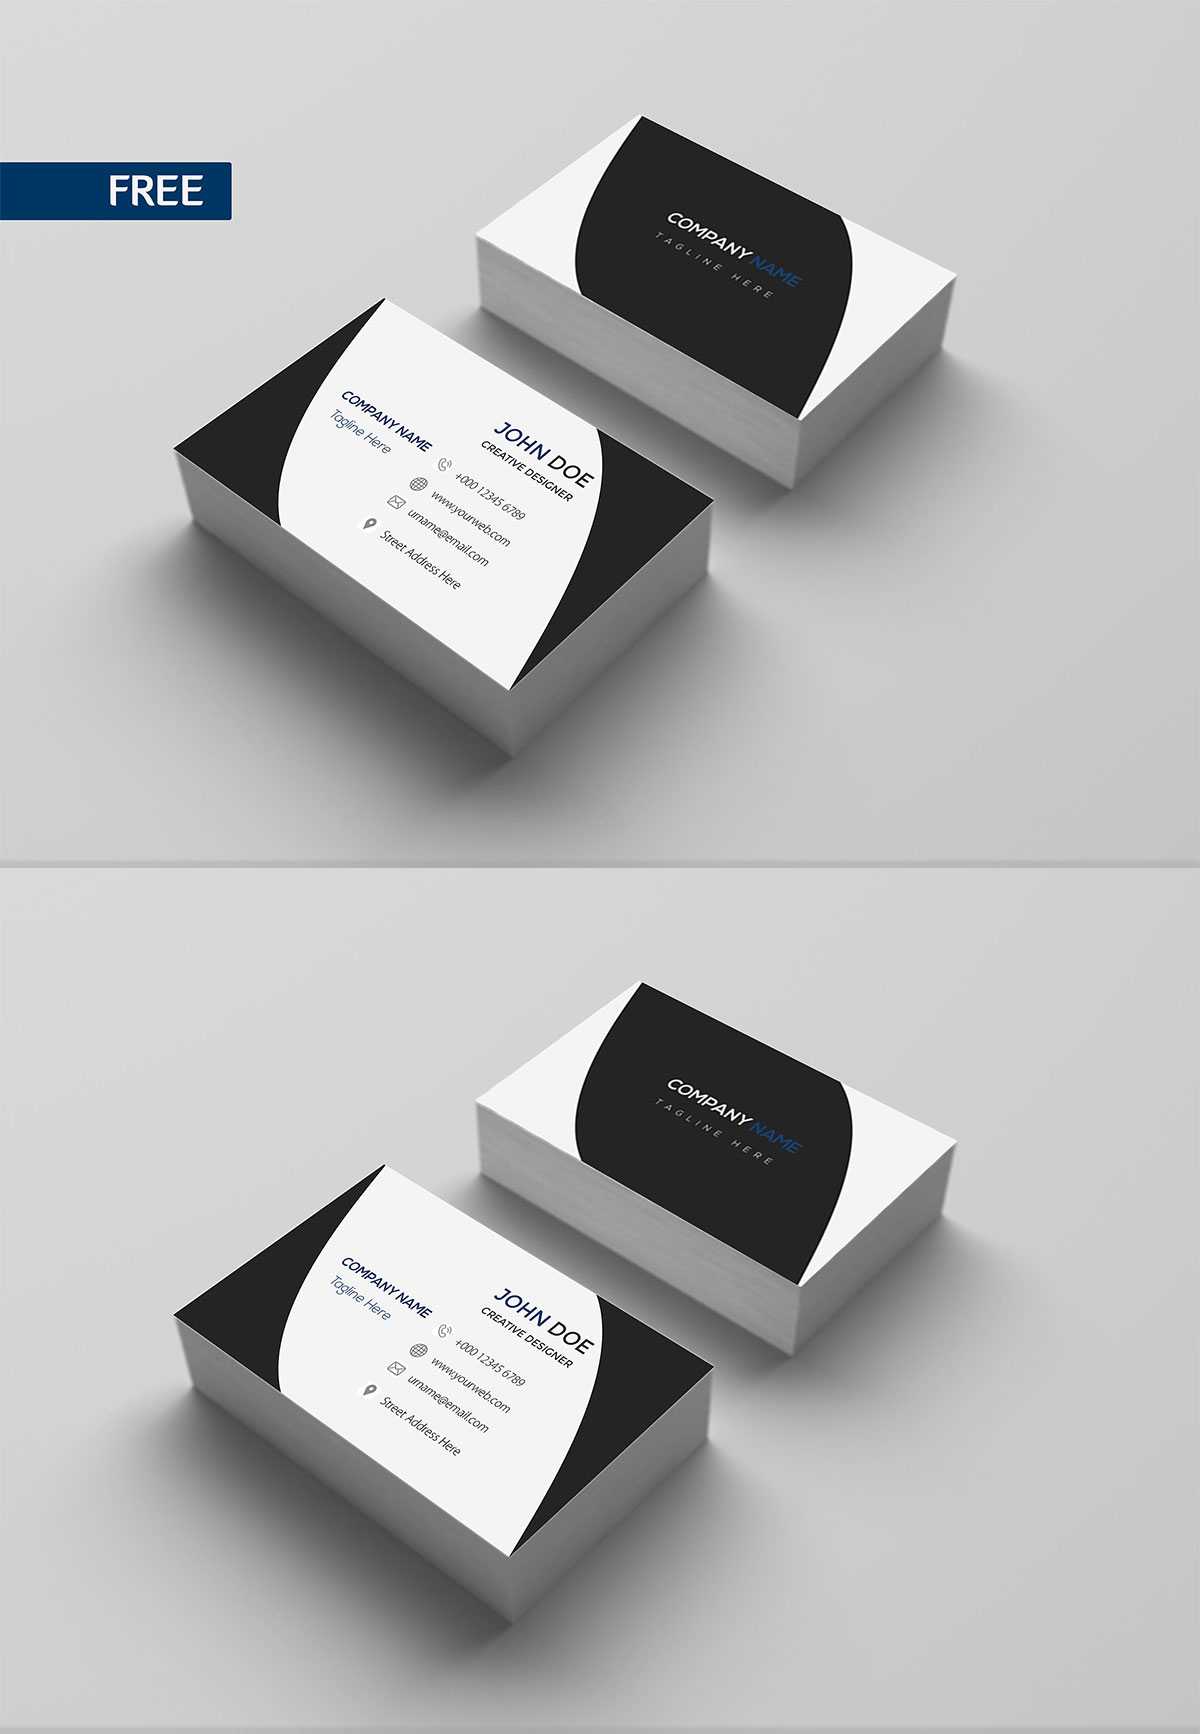 Free Print Design Business Card Template - Creativetacos Throughout Free Template Business Cards To Print